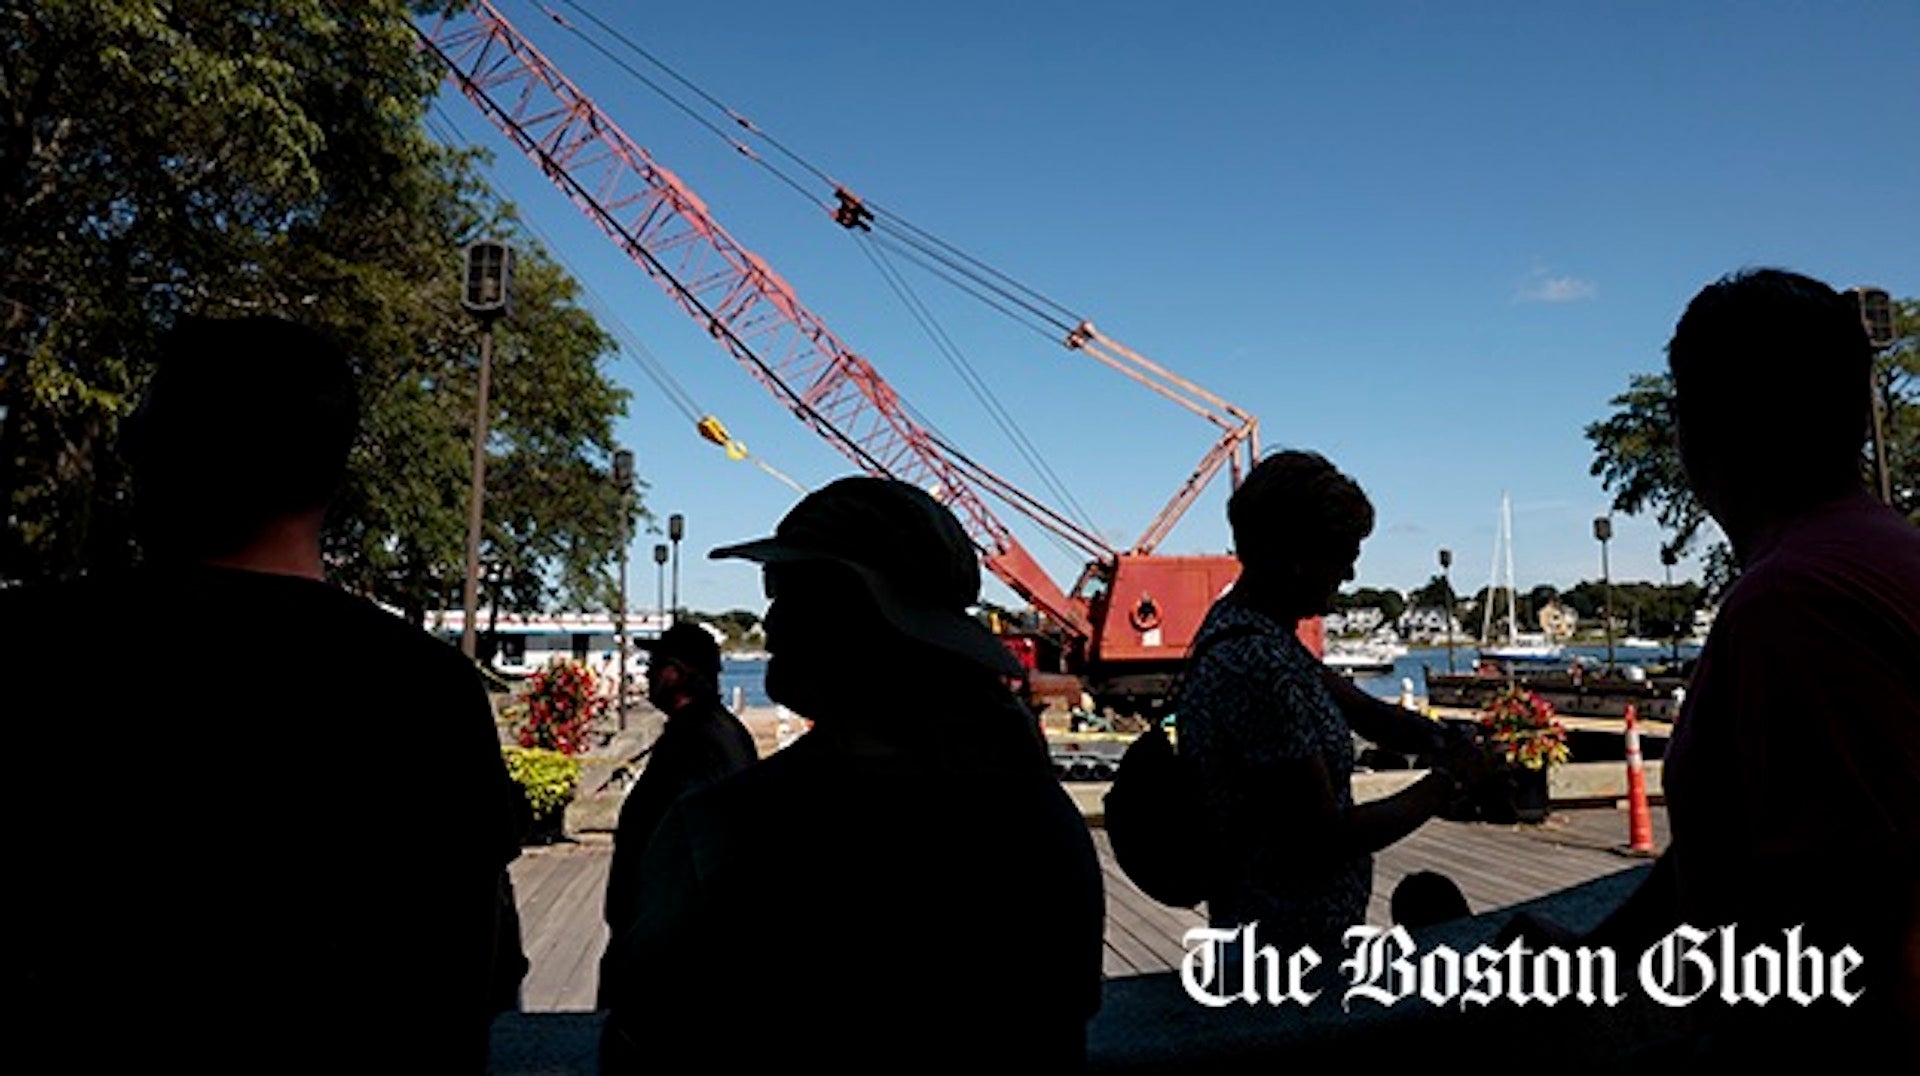 Red Sox, WS Development plan transformation near Fenway Park - Boston  Business Journal